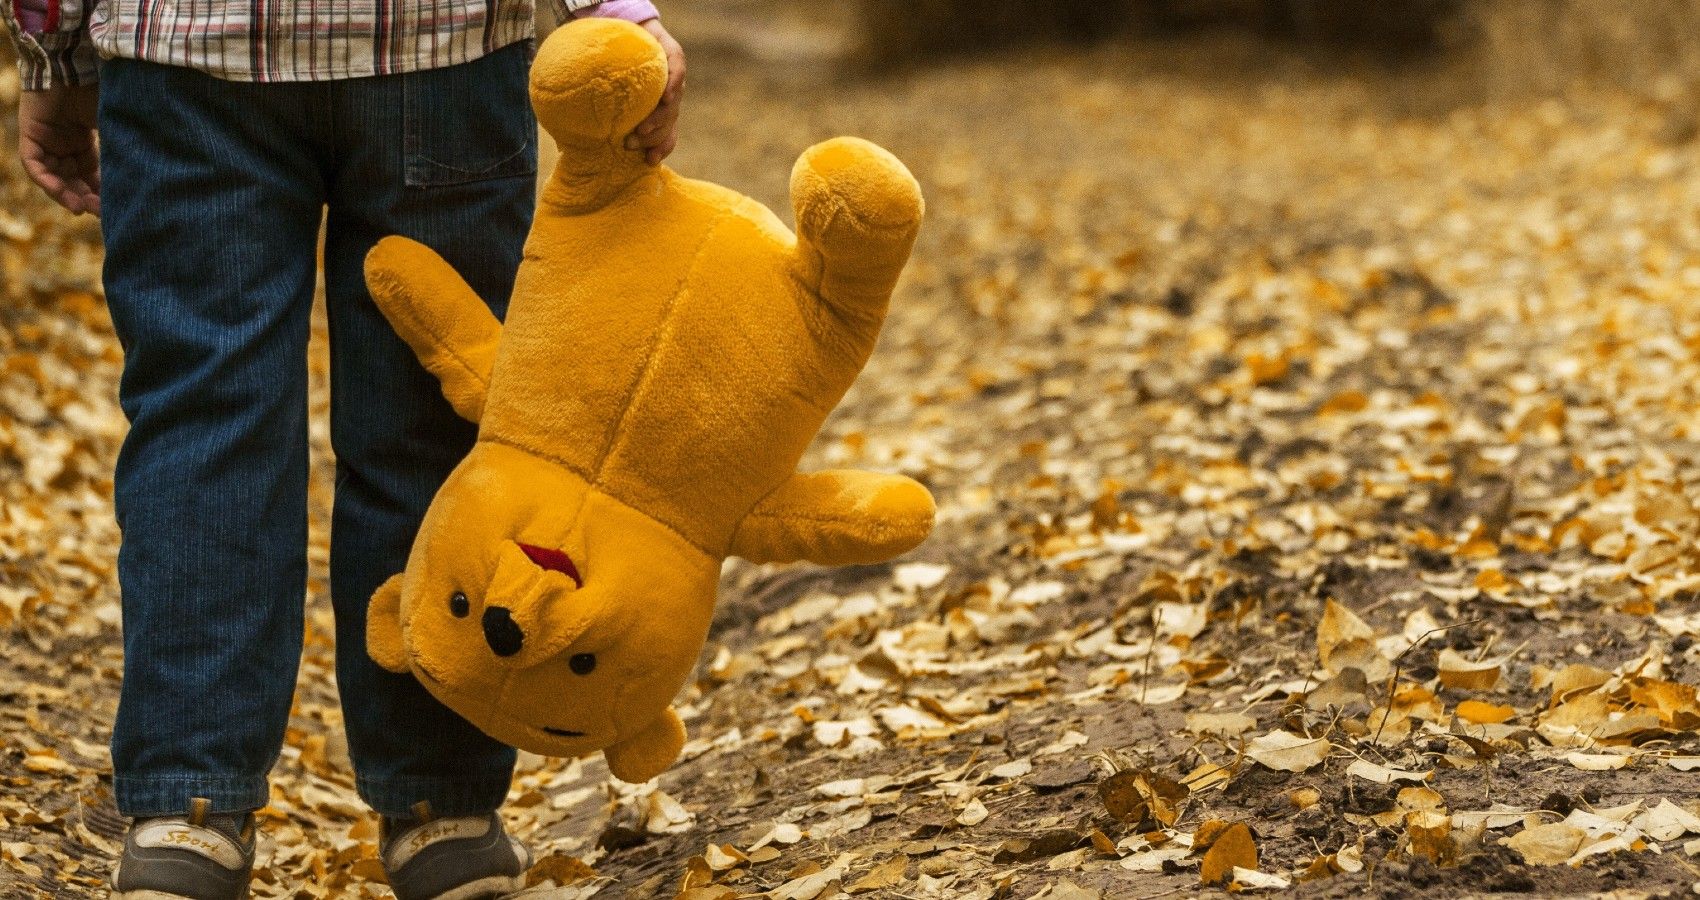 A boy holding on to a teddy bear